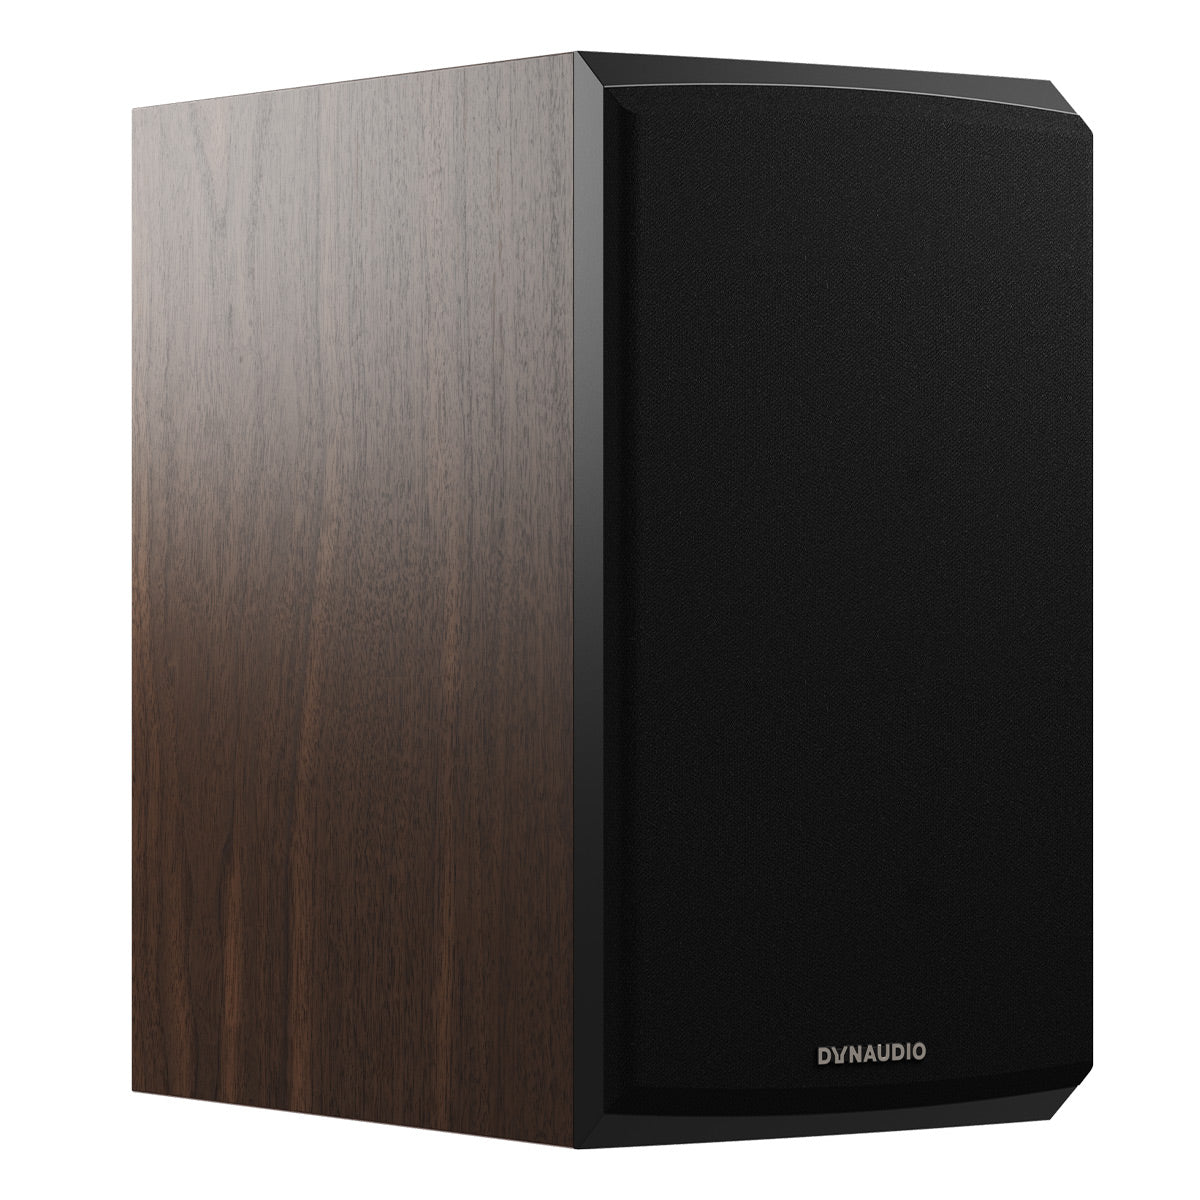 Dynaudio Emit 20 Compact Bookshelf Speaker - Pair (Walnut Wood)